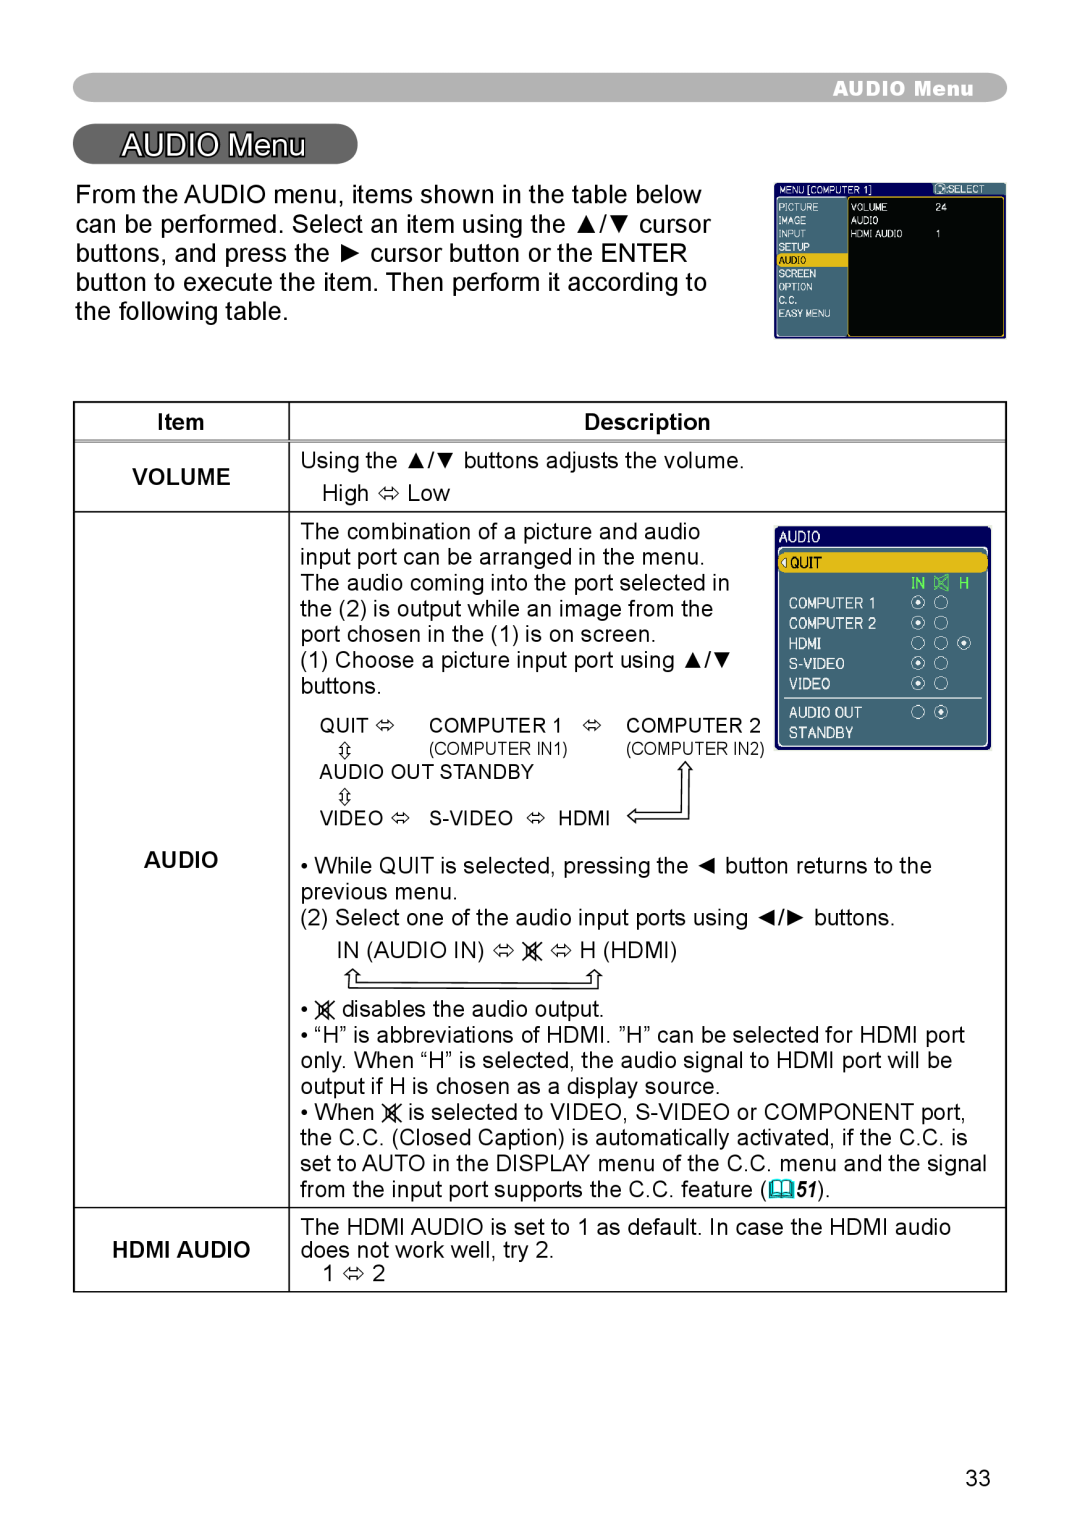 Dukane 8783 user manual AUDIO Menu, Description, Volume, Using the / buttons adjusts the volume, High ó Low, Hdmi Audio 